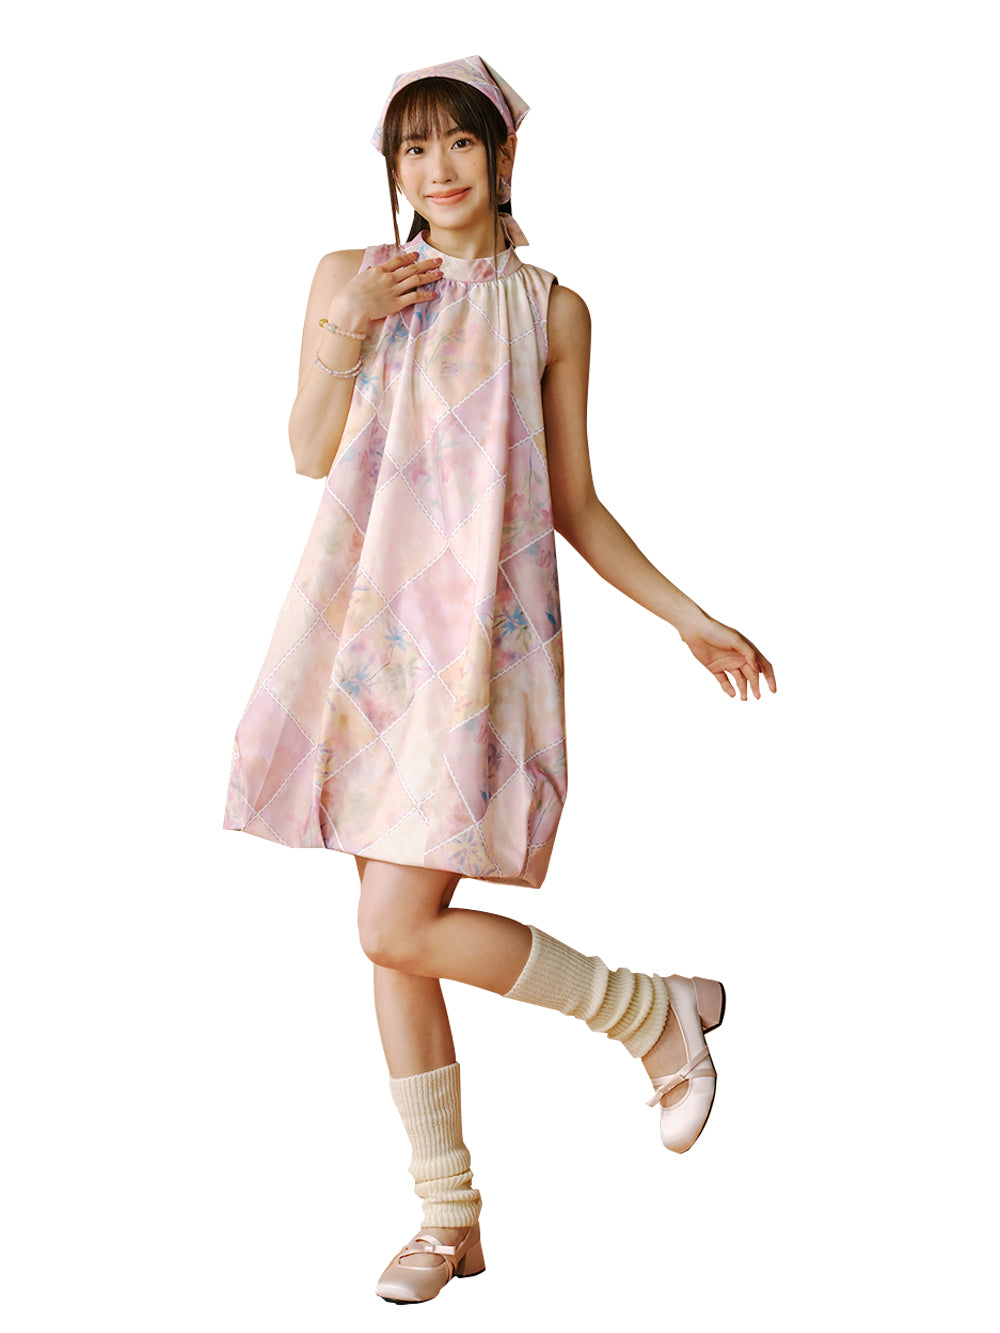 MUKTANK x LOUMUTAKU Youthful Plaid Pattern with Floral Ombre Halter-neck Dress